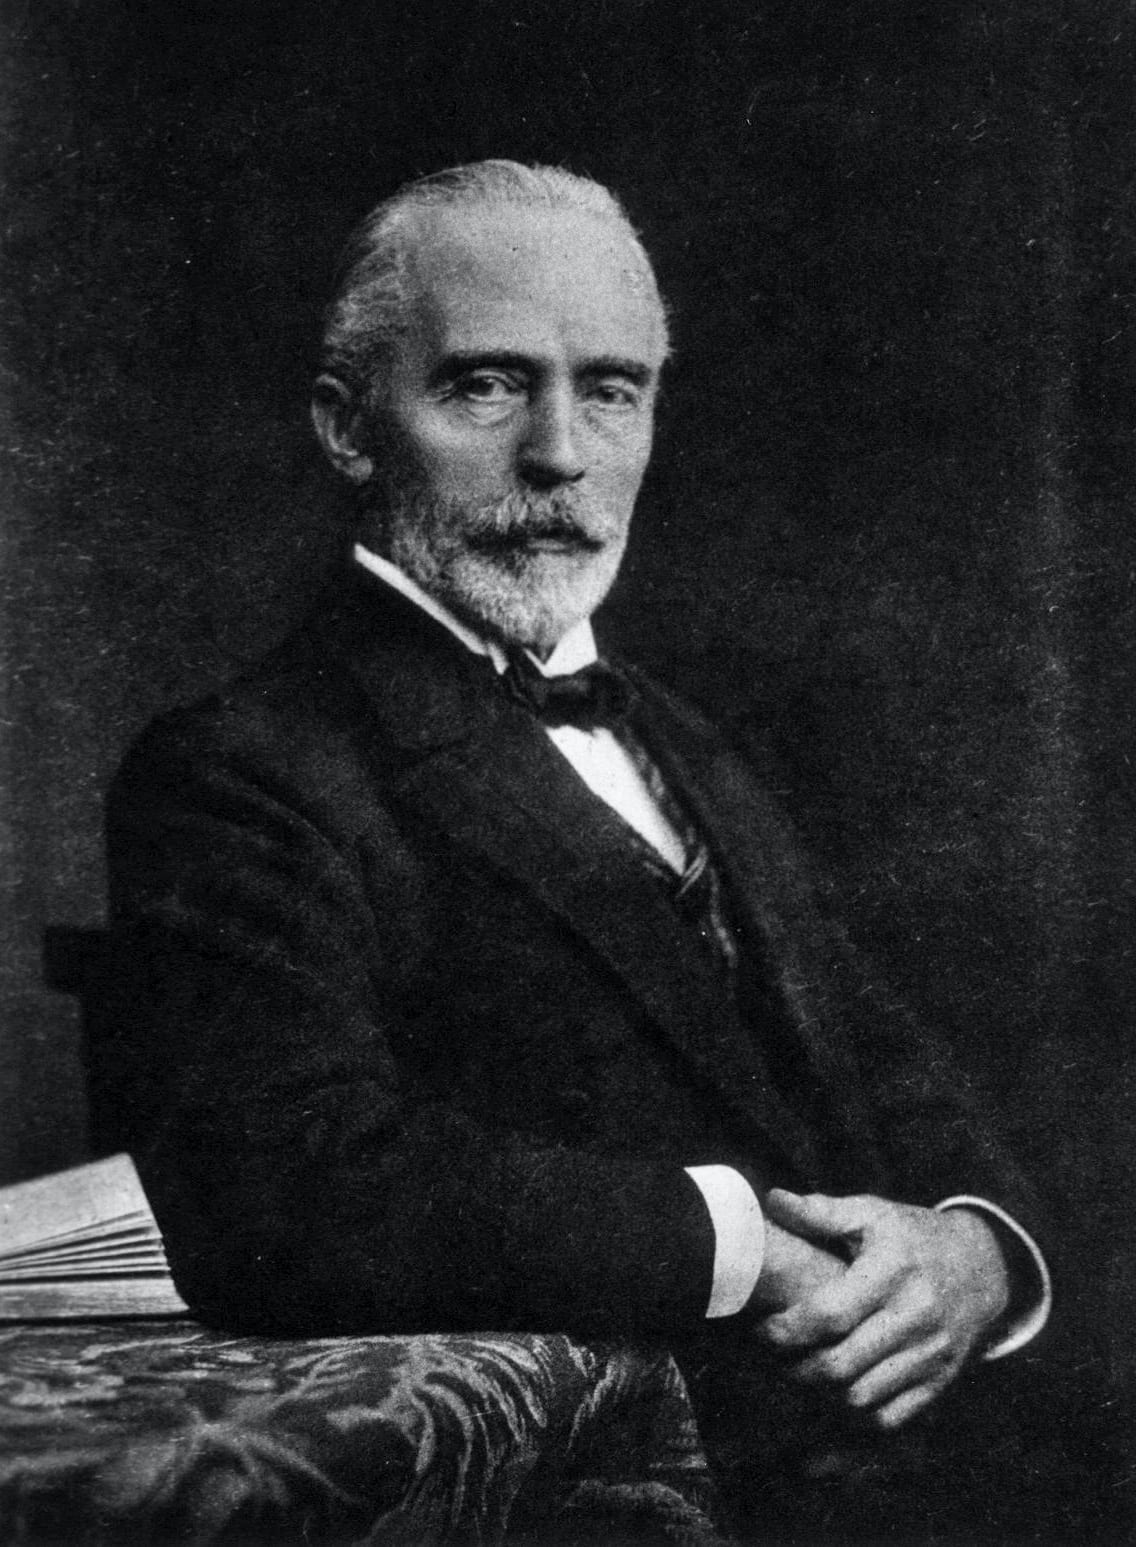 Portrait of Theodor Kocher